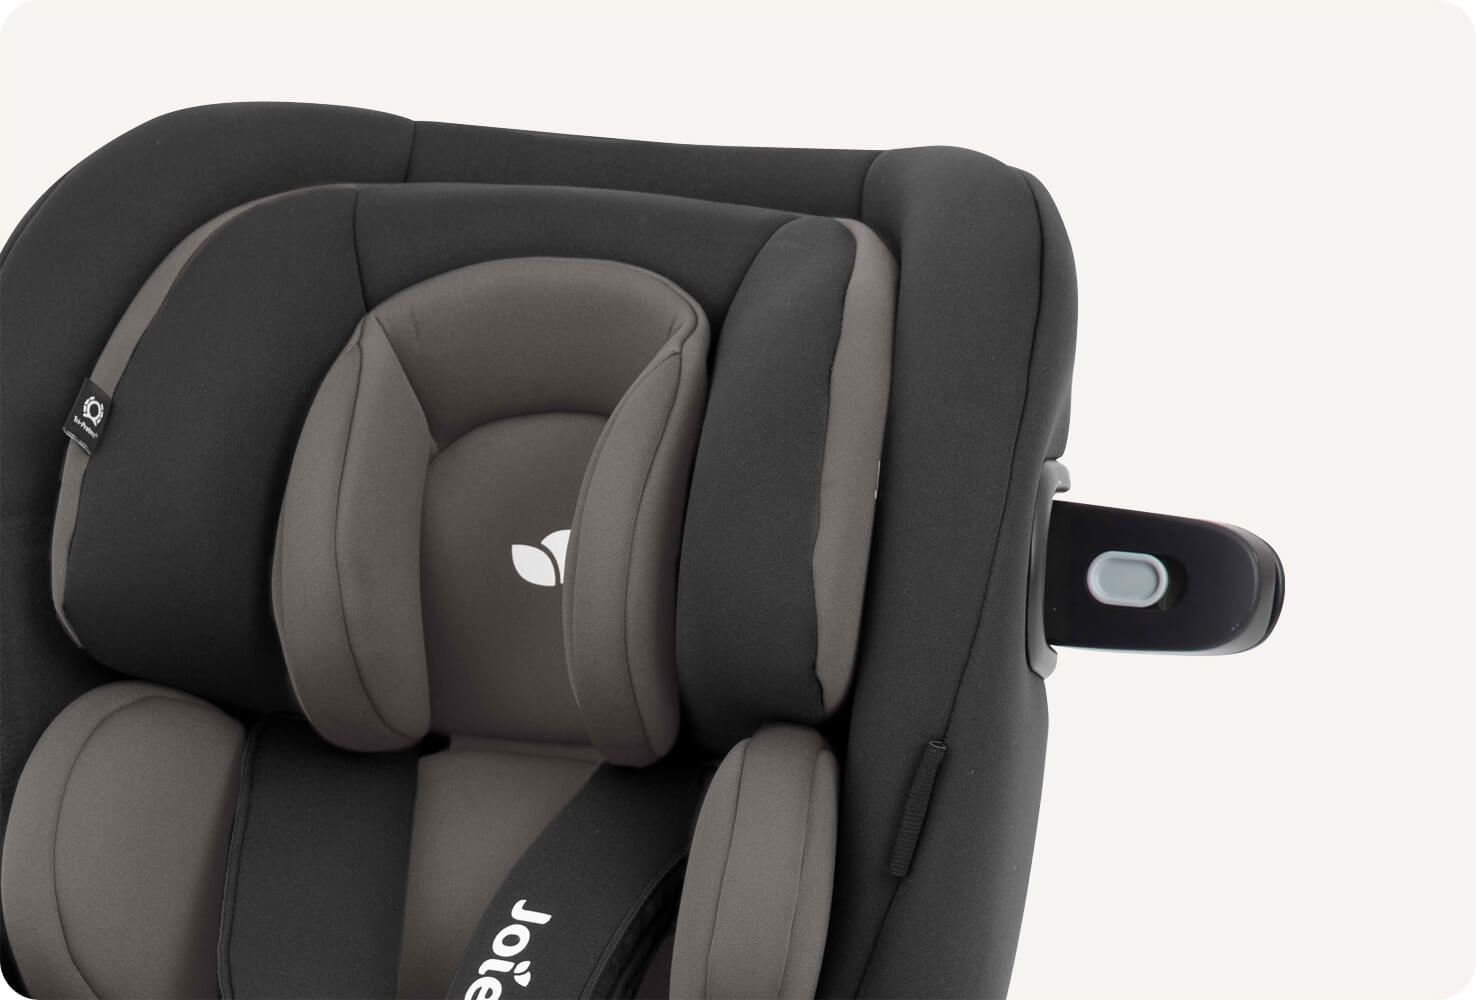  Closeup of the headrest on a black Joie i-Venture car seat.